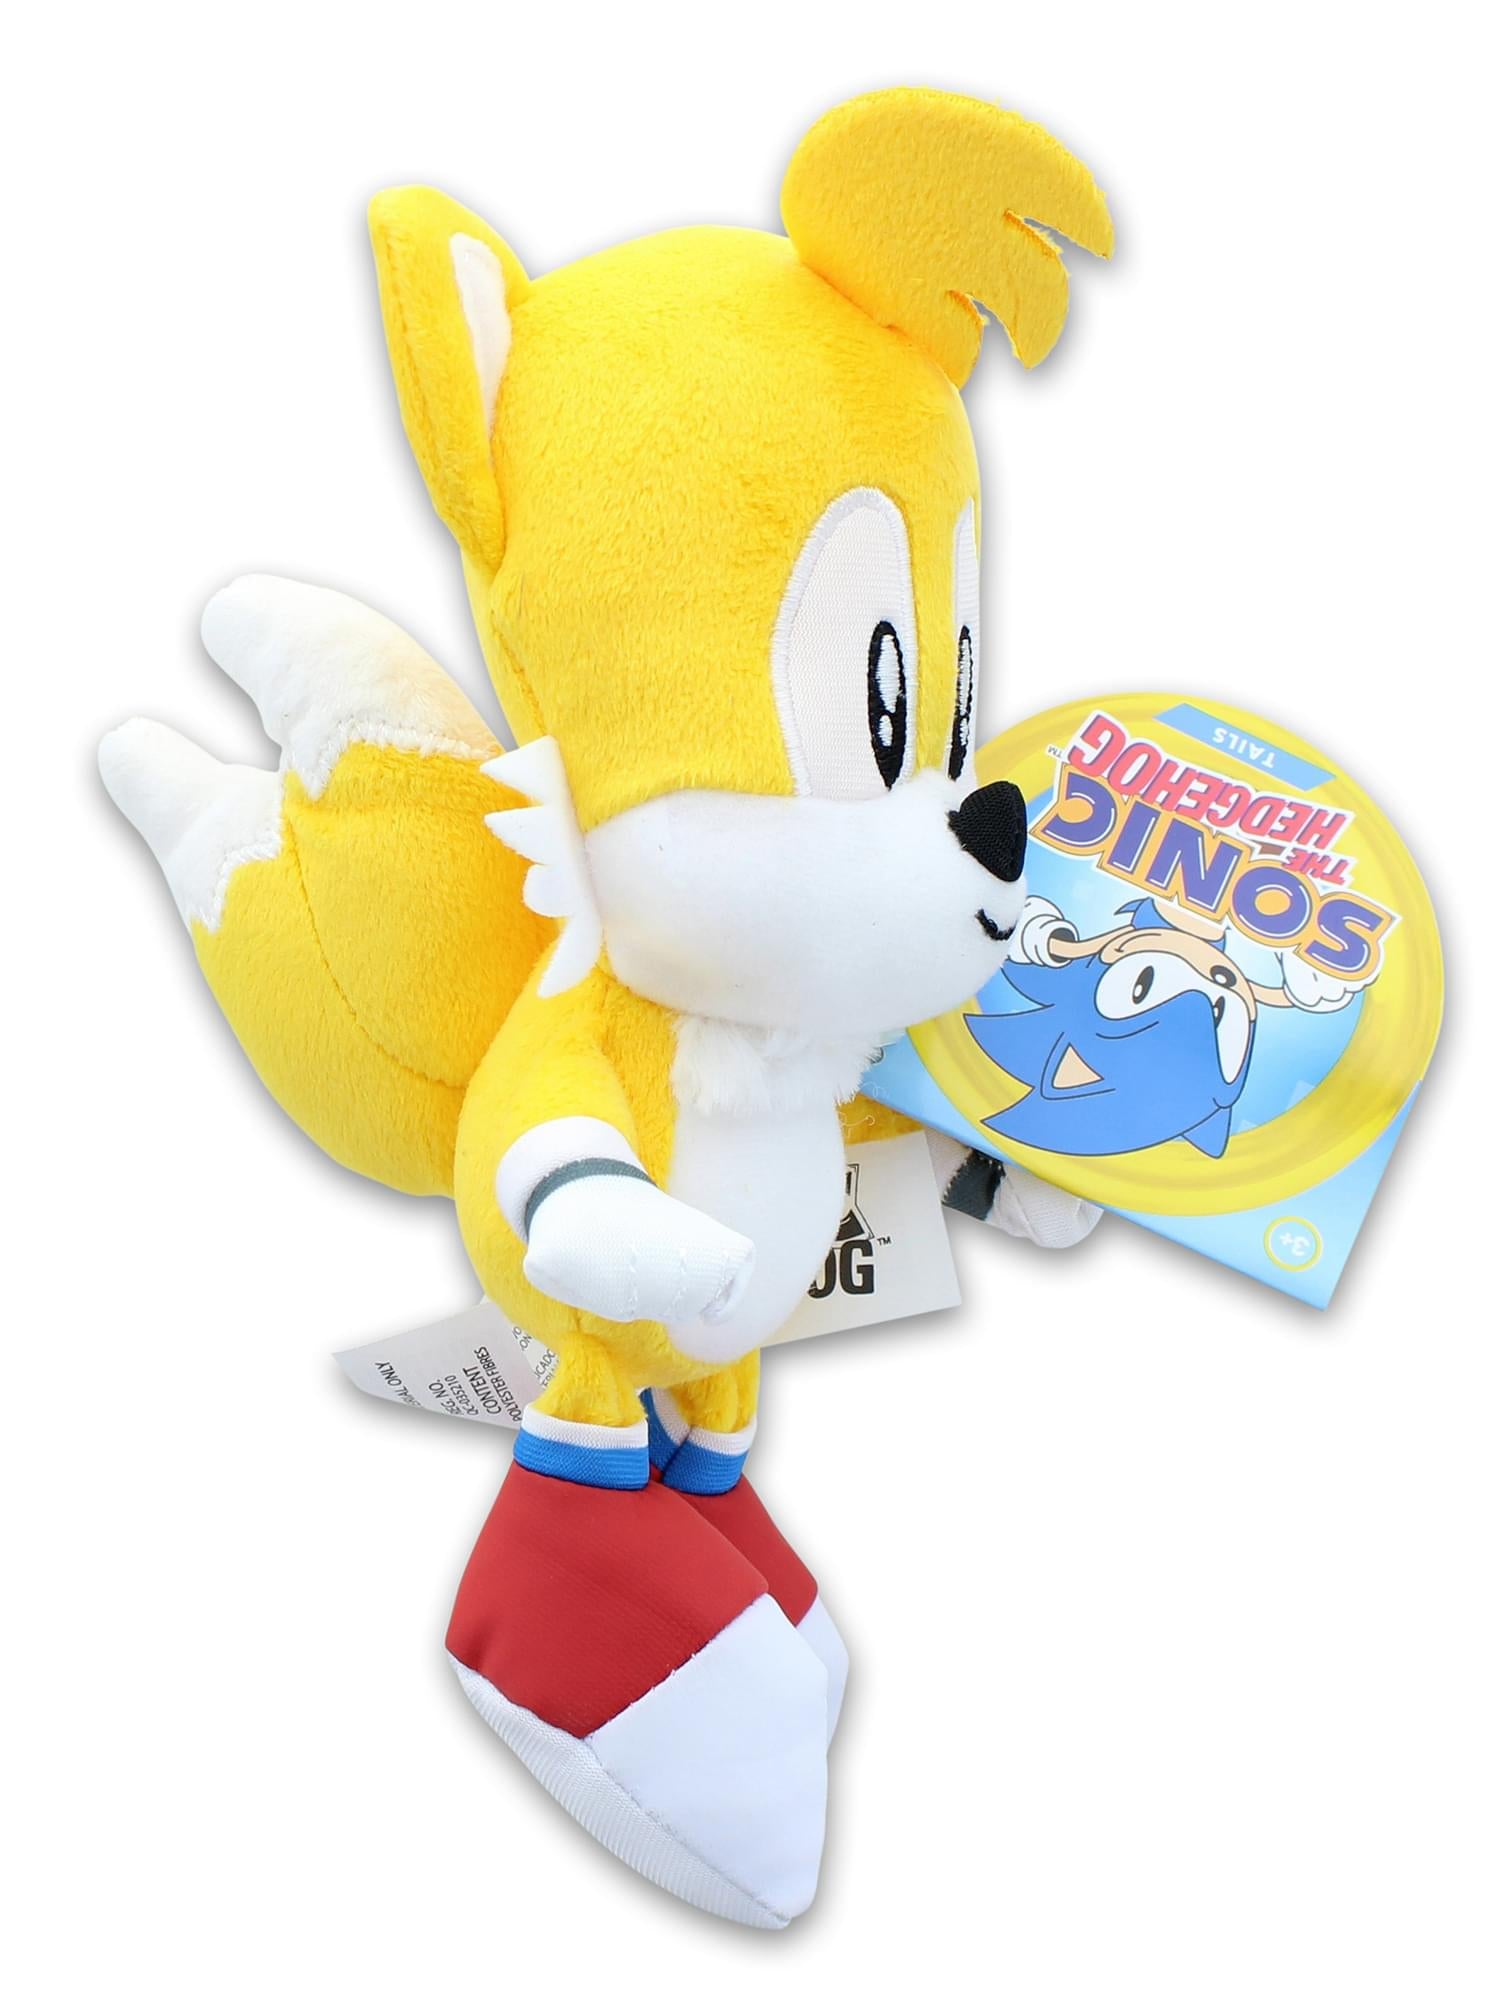 Sonic the Hedgehog 7 Plush - Tails